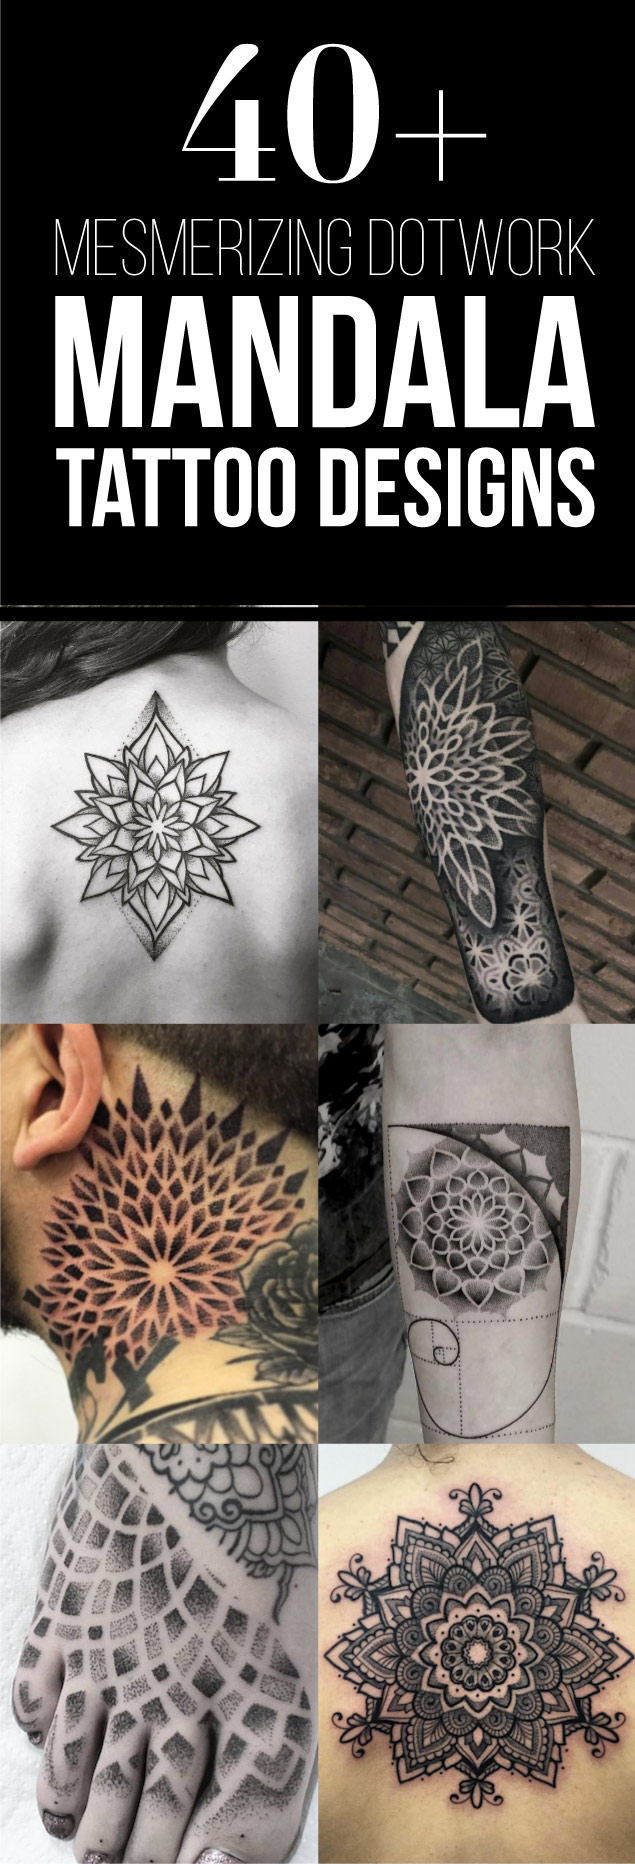 40+ Mesmerizing Dotwork Mandala Tattoo Designs | TattooBlend